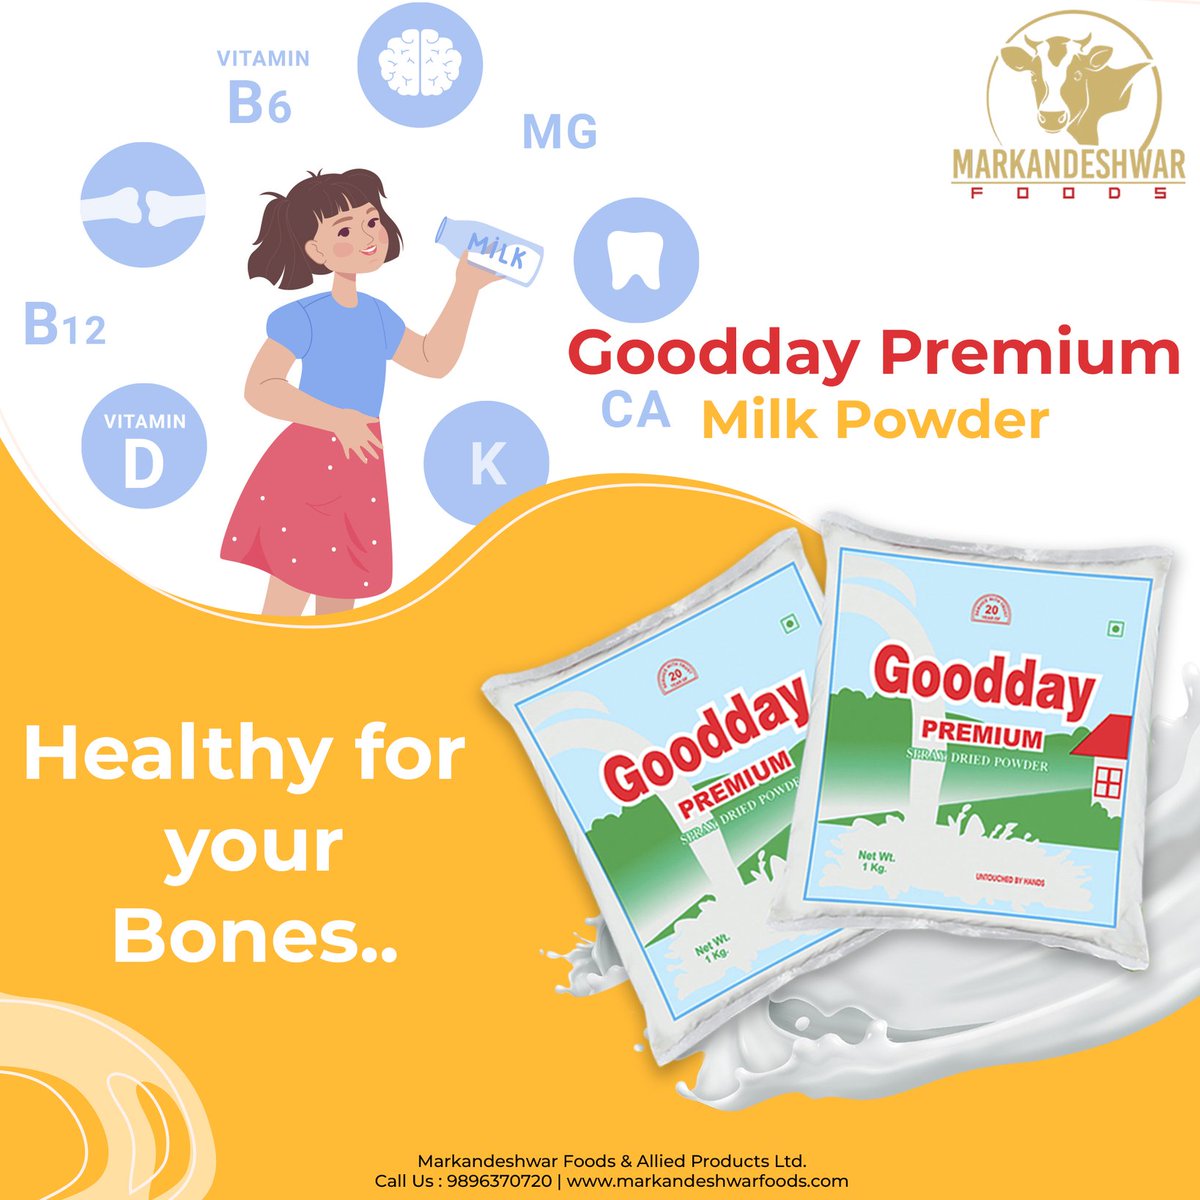 G O O D D A Y .  M I L K .  P O W D E R . 
Healthy for your bones .

#GooddayPremiumMilk

Markandeshwar Foods & Allied Products Ltd.
For trade inquiry 9896370720, 9729344011, 9810754400.
.
.
.
#markandeshwarfoods #milk #dairy #dairyproducts #goodday #Healthy #Healthyliving